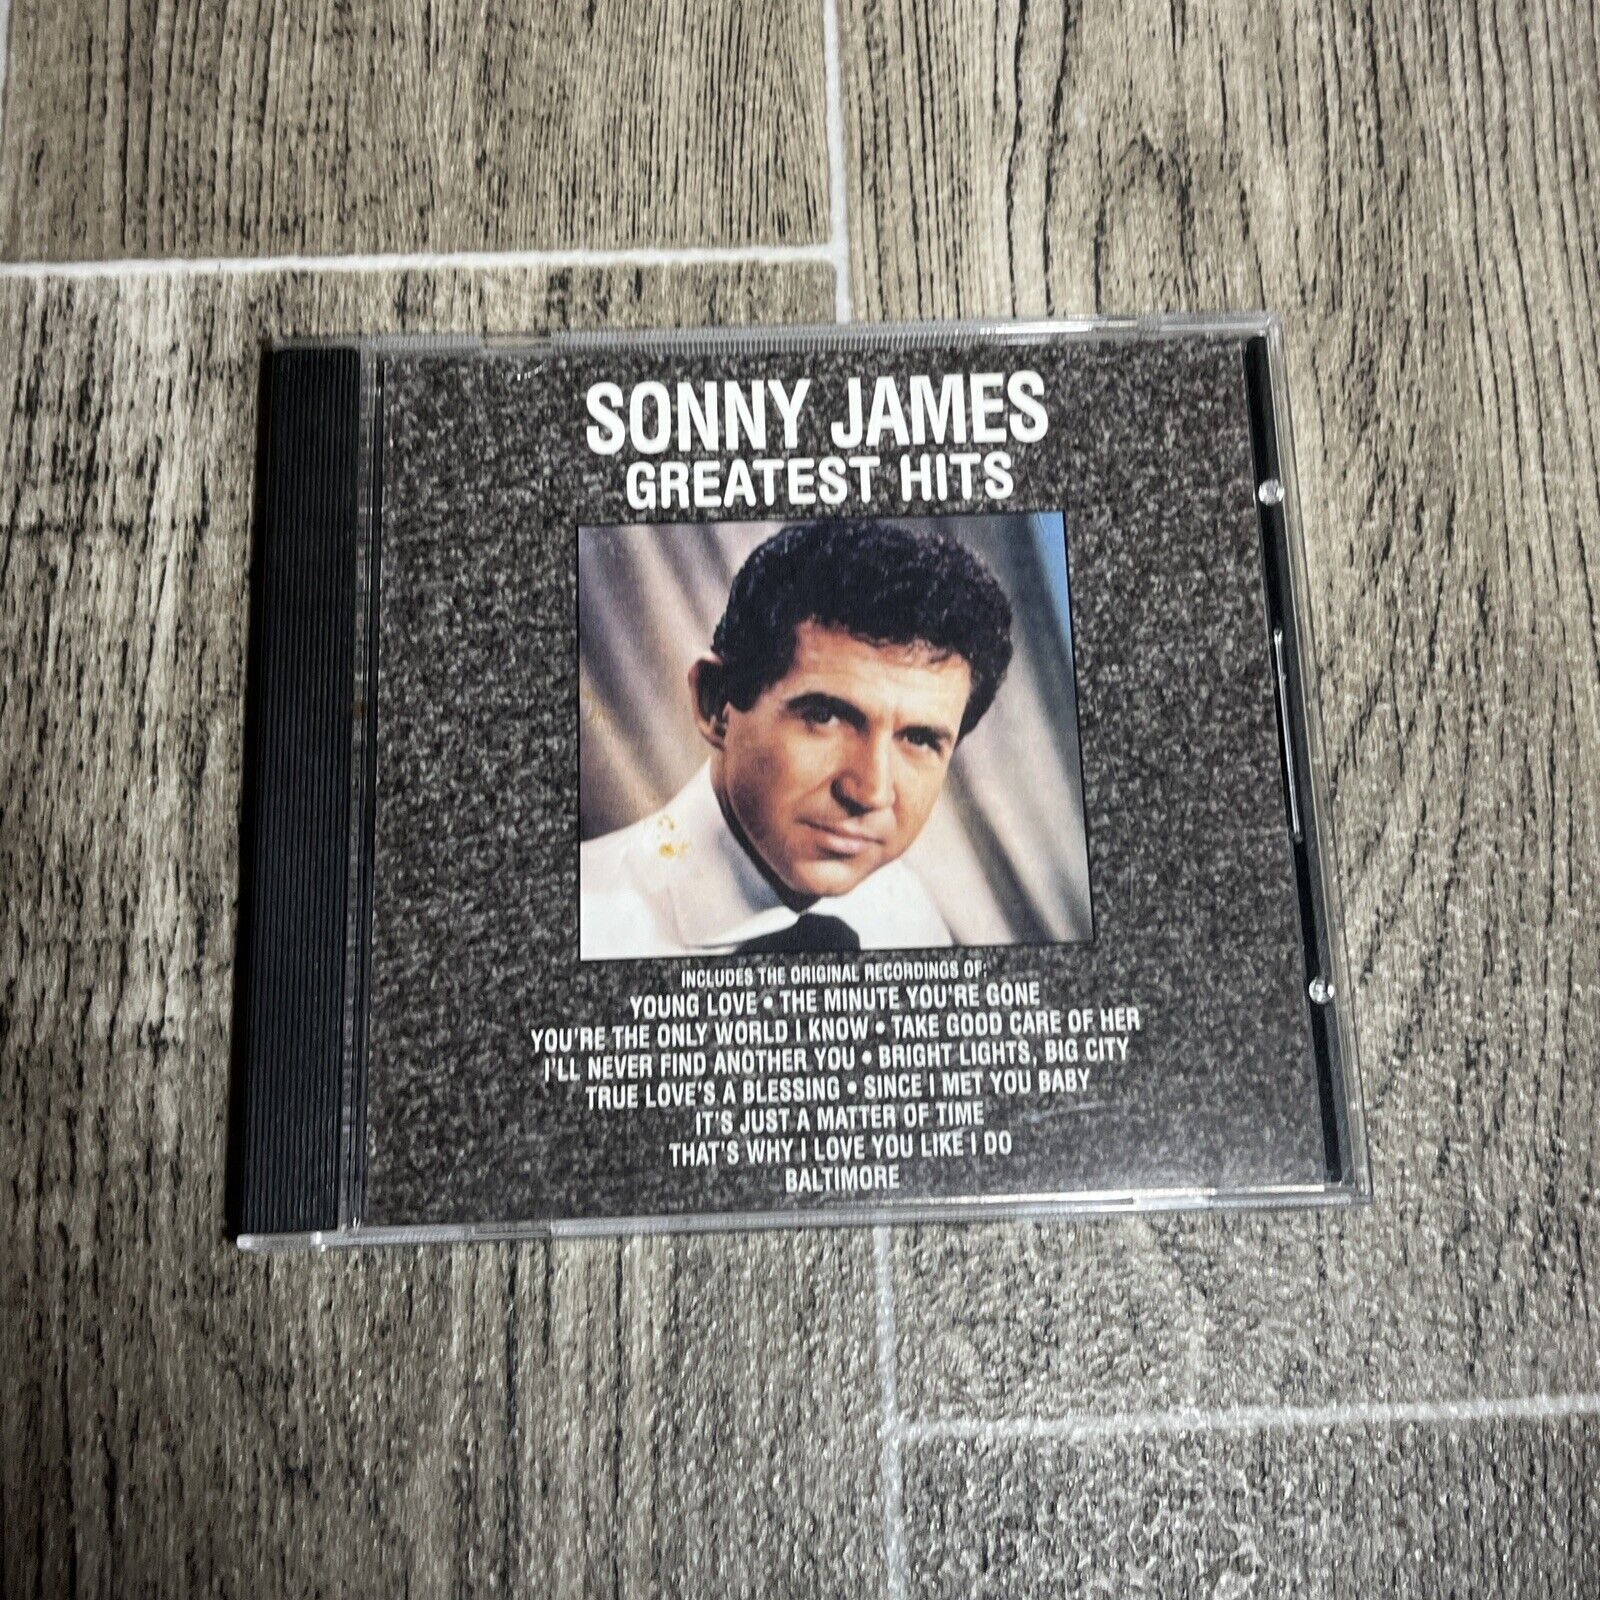 Sonny James Greatest Hits 1990 CD Album